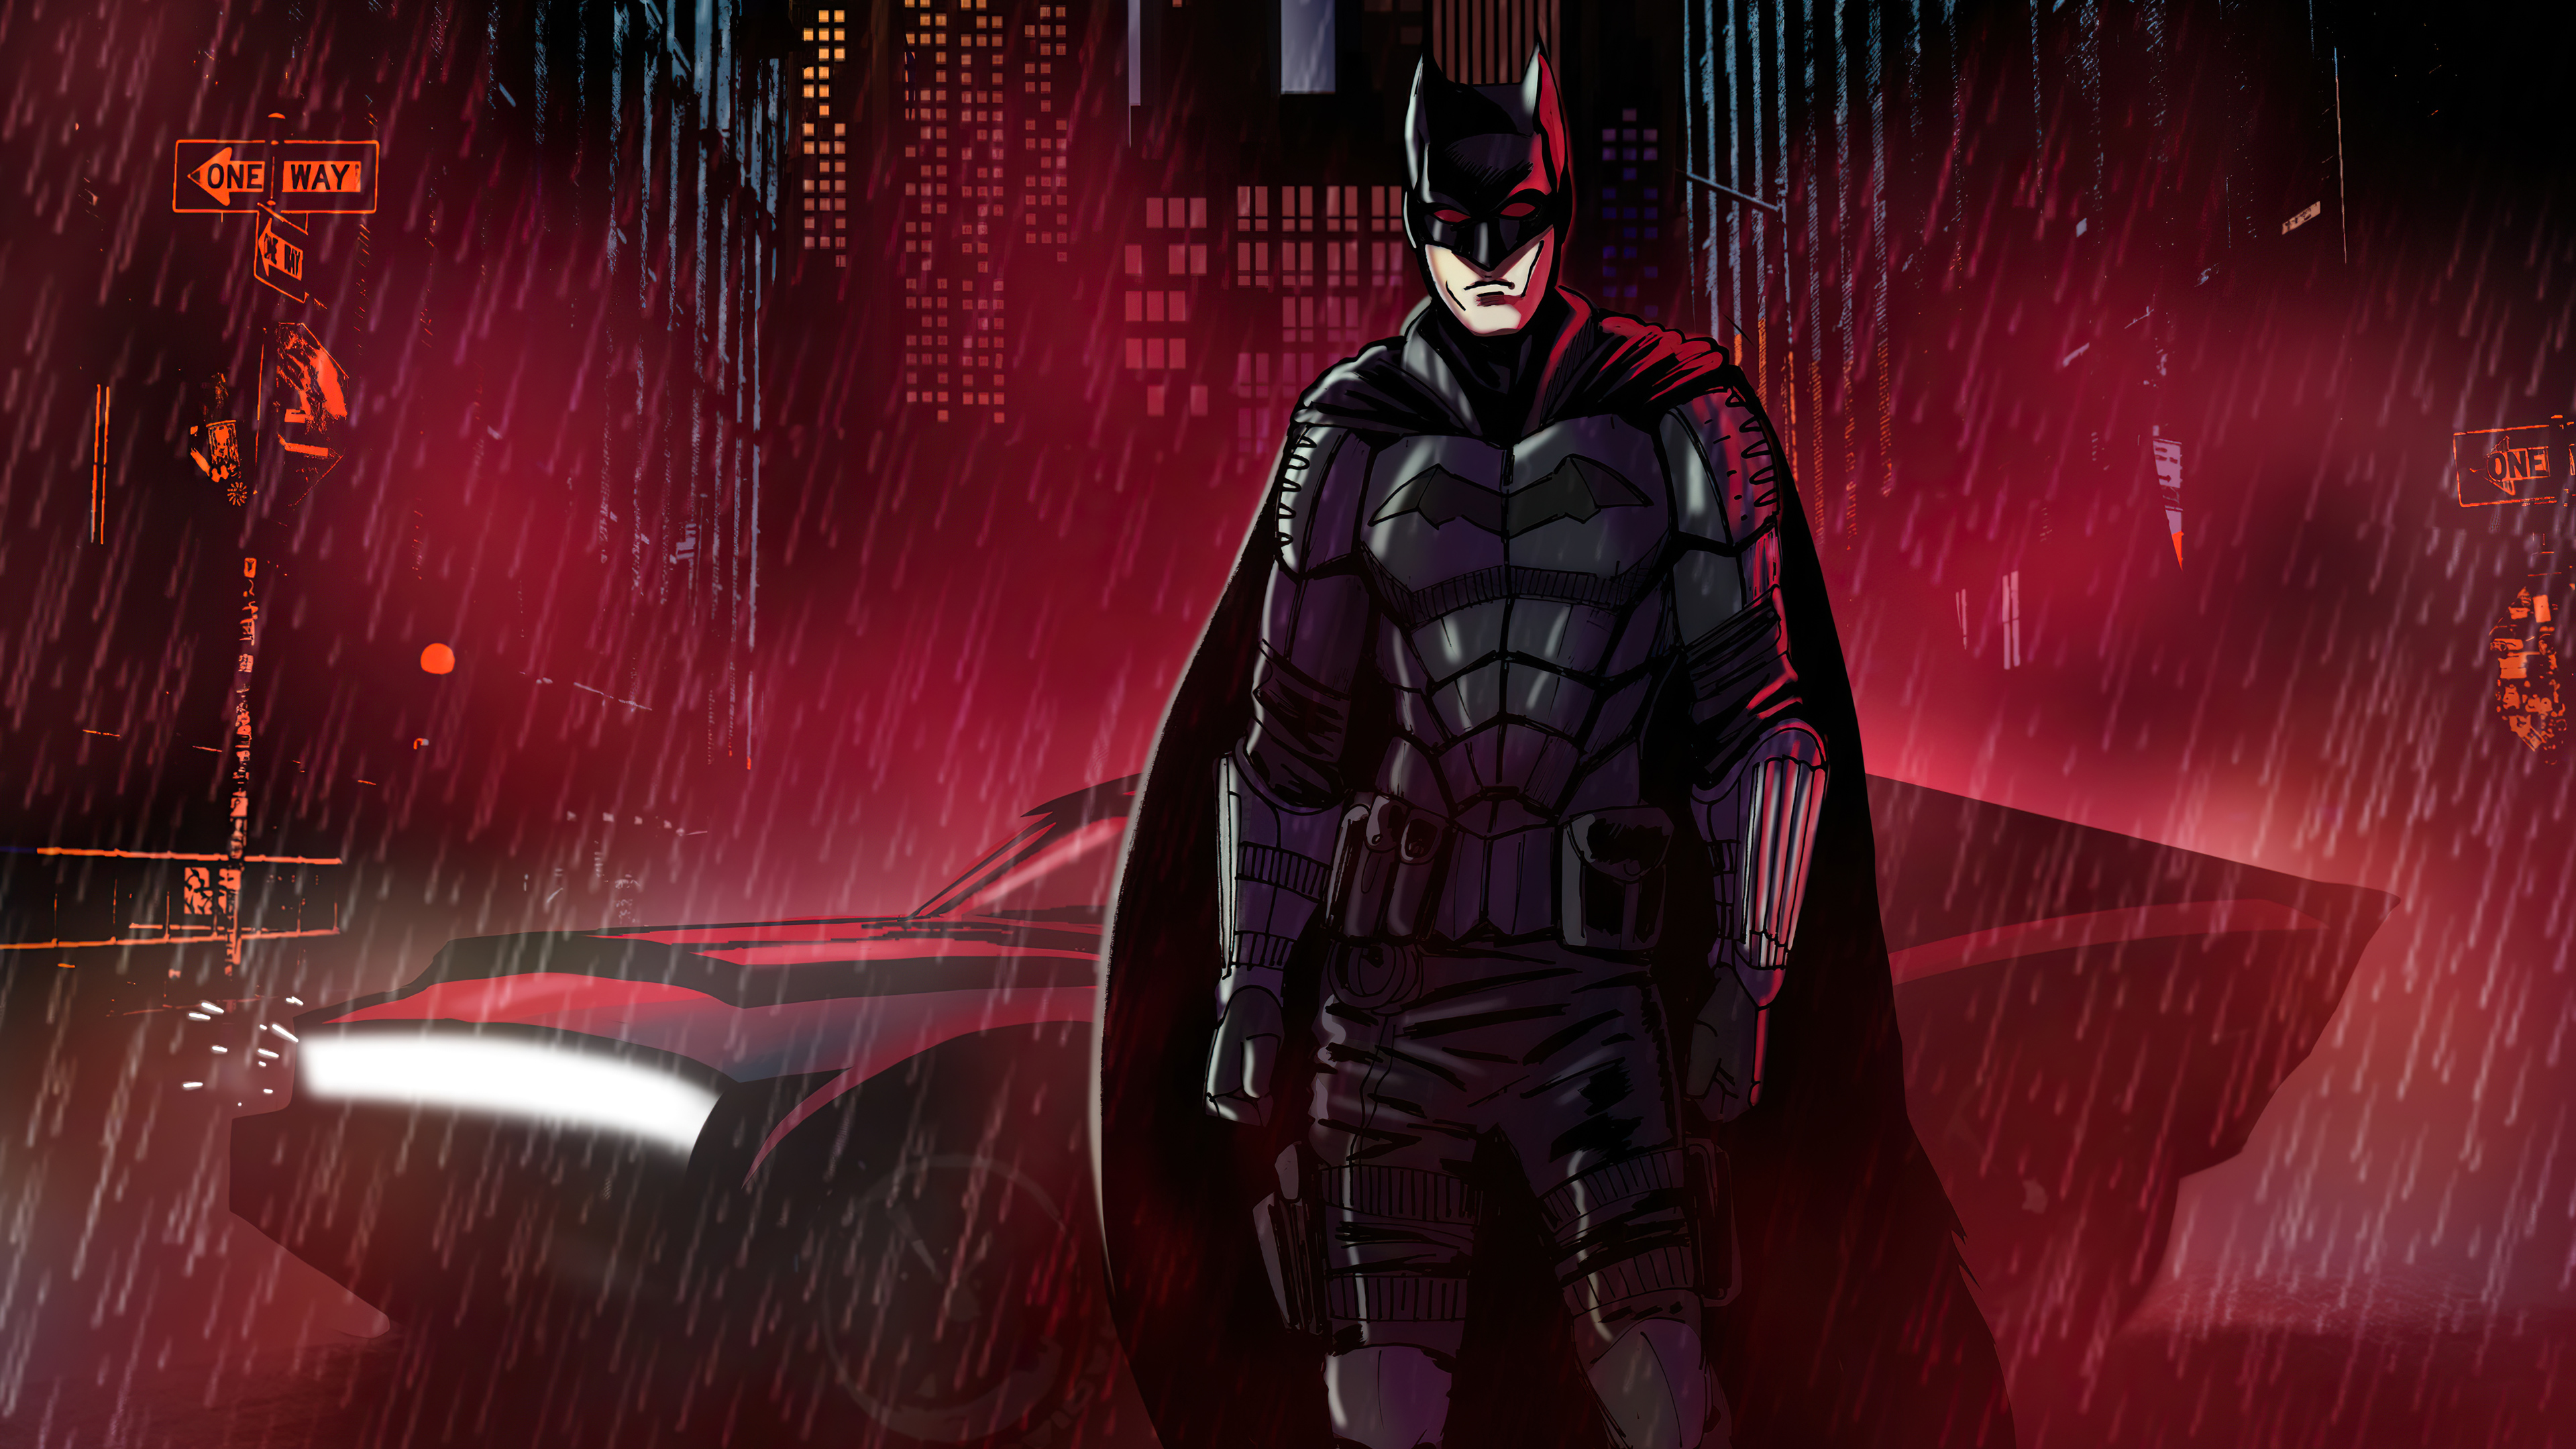 The Batman Night Cyberpunk Neon 4k 320x568 Resolution HD 4k Wallpaper, Image, Background, Photo and Picture